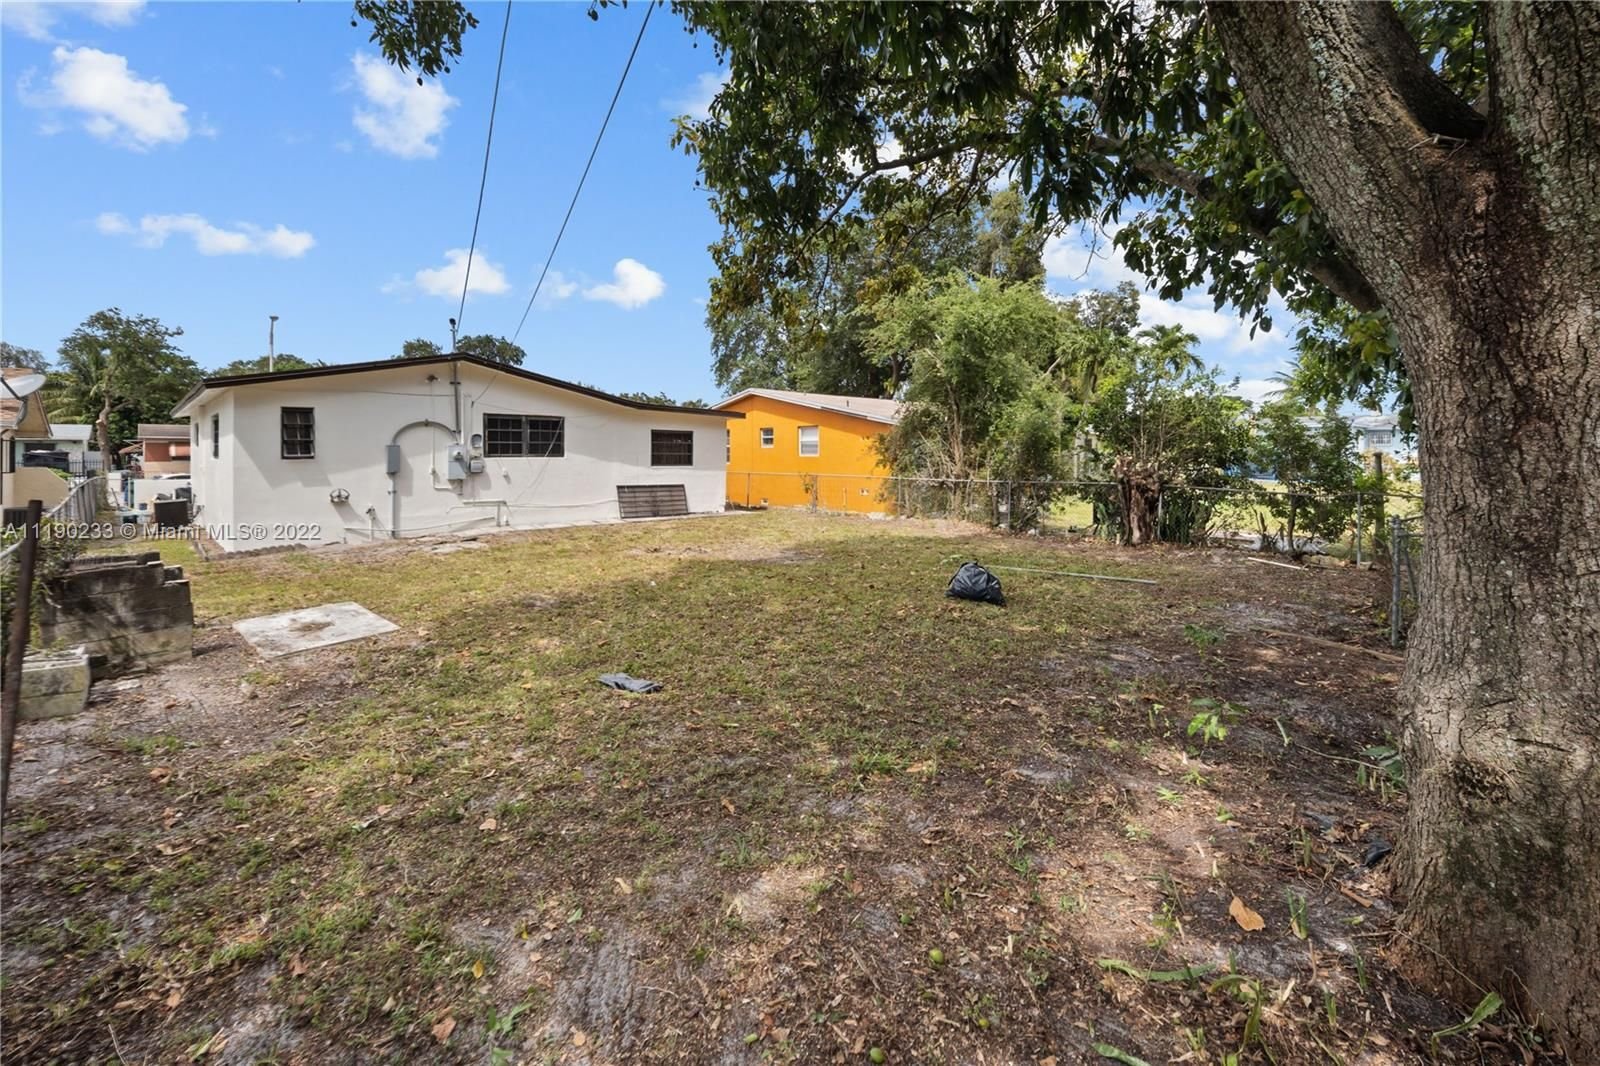 Real estate property located at 2540 120th St, Miami-Dade County, Miami, FL